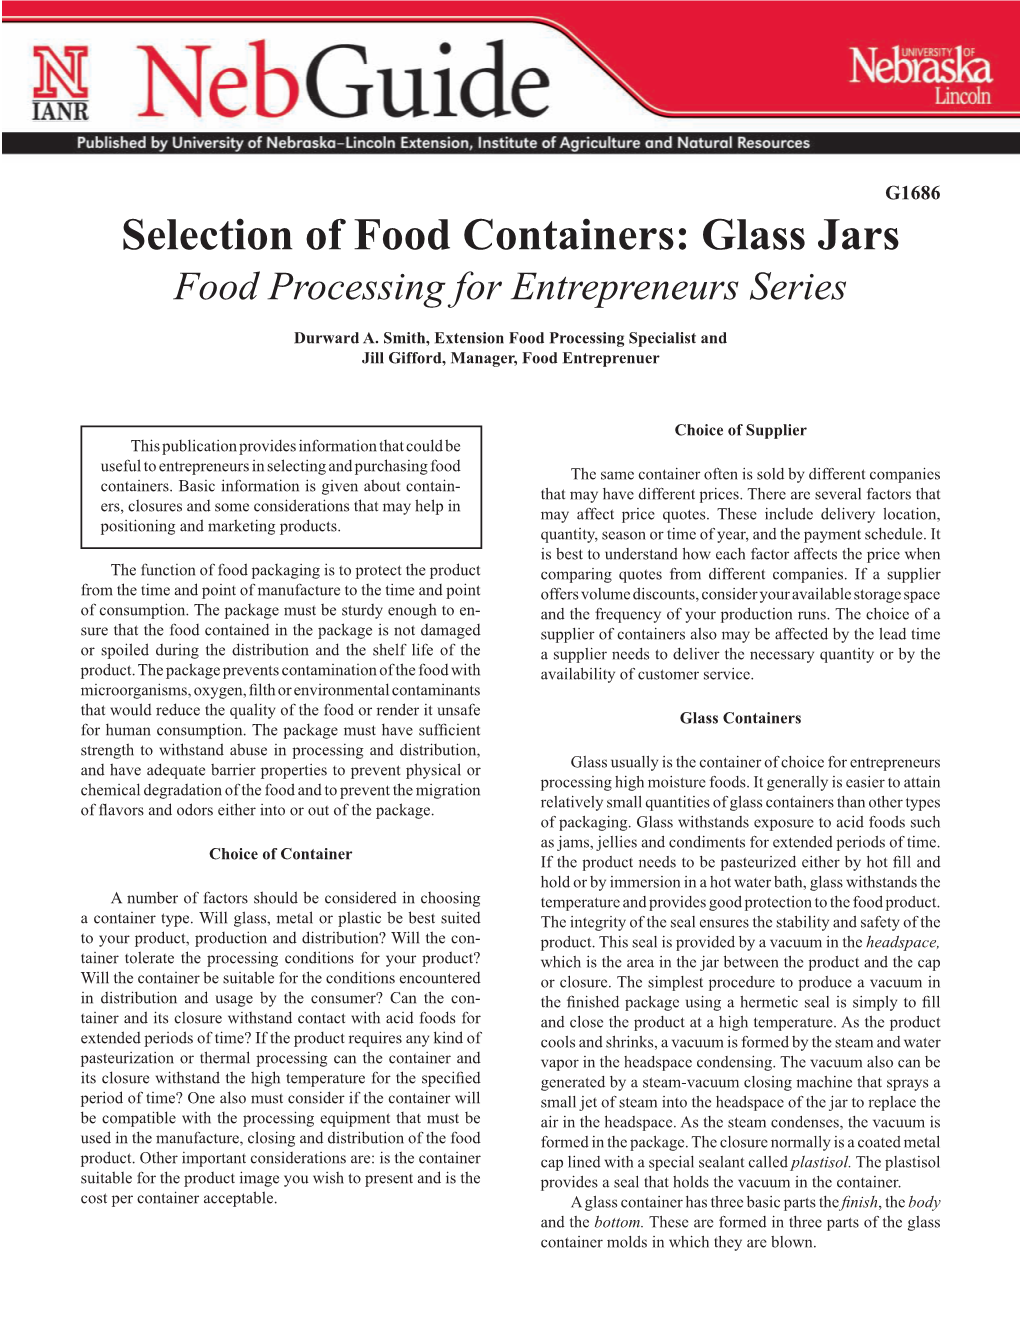 Glass Jars Food Processing for Entrepreneurs Series